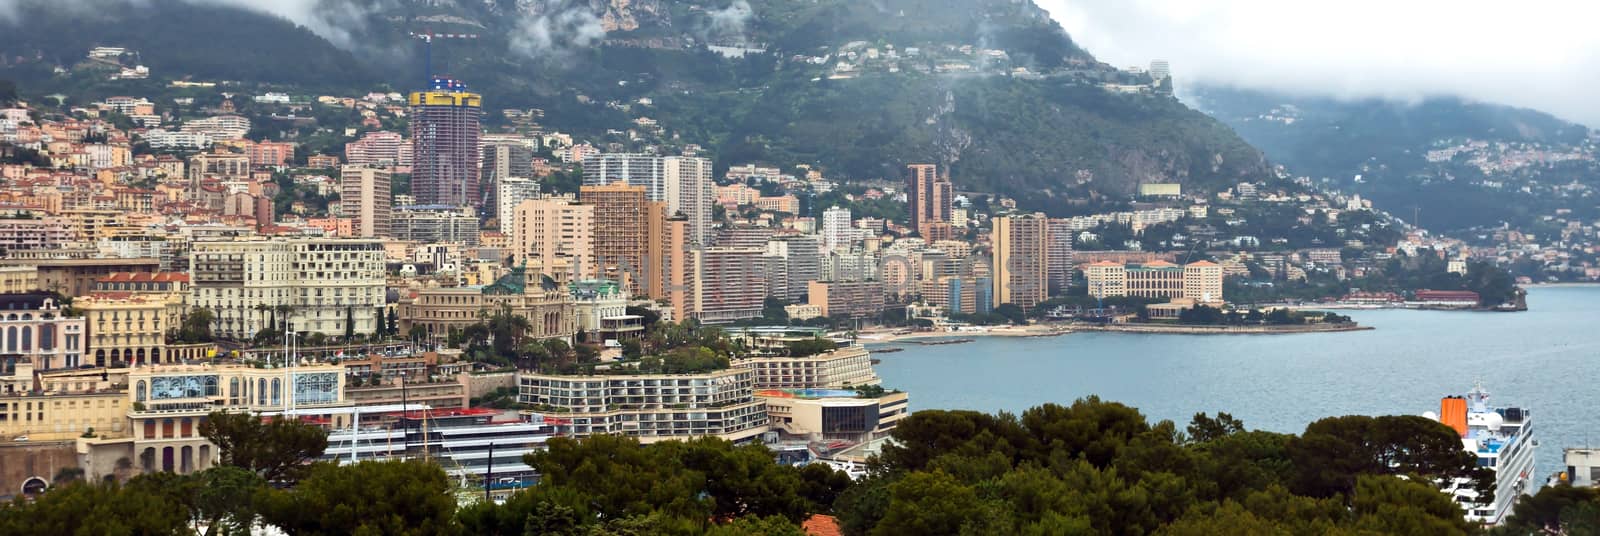 Monaco - Panoramic view by Venakr